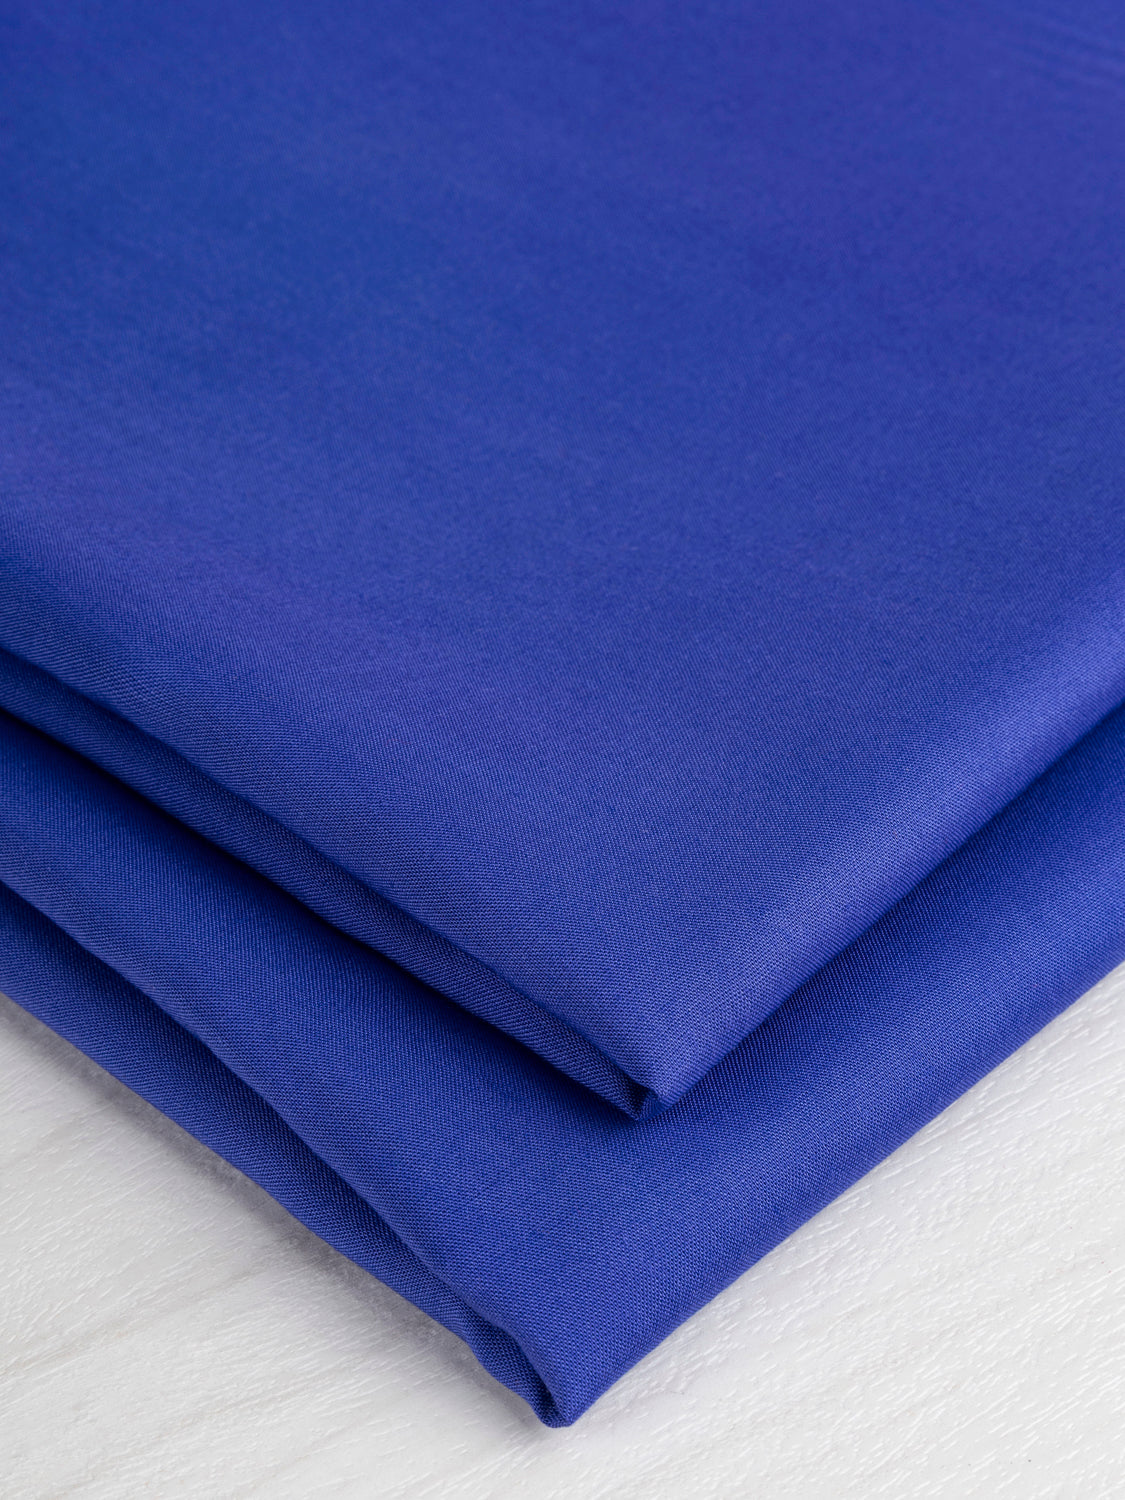 Lino Italiano 60 Polyester Viscose Fabric By The Yard